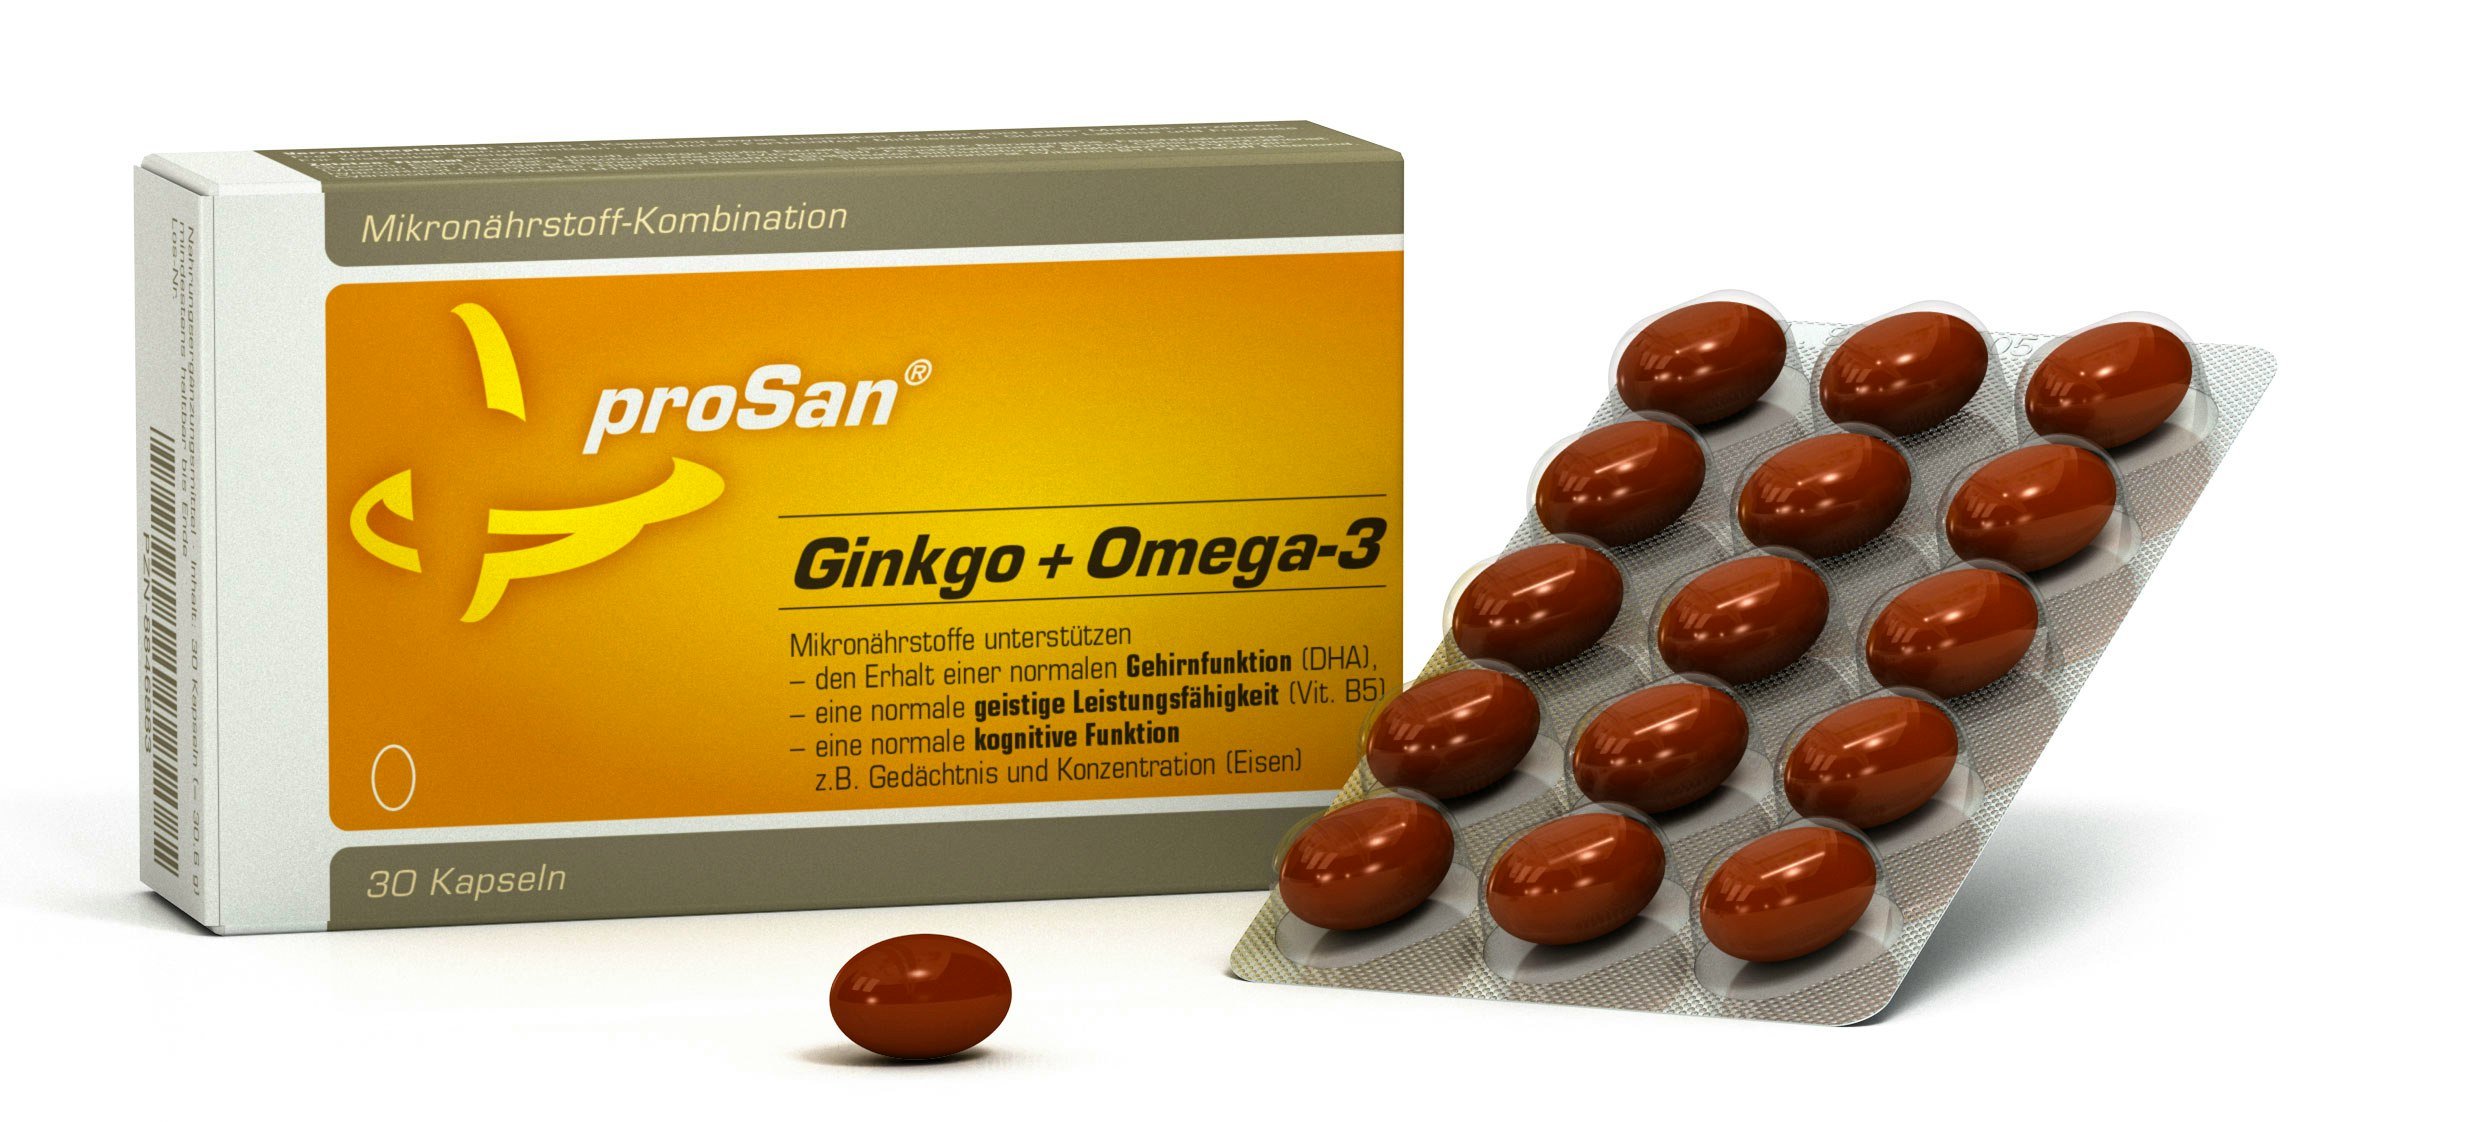 proSan Ginkgo+Omega-3